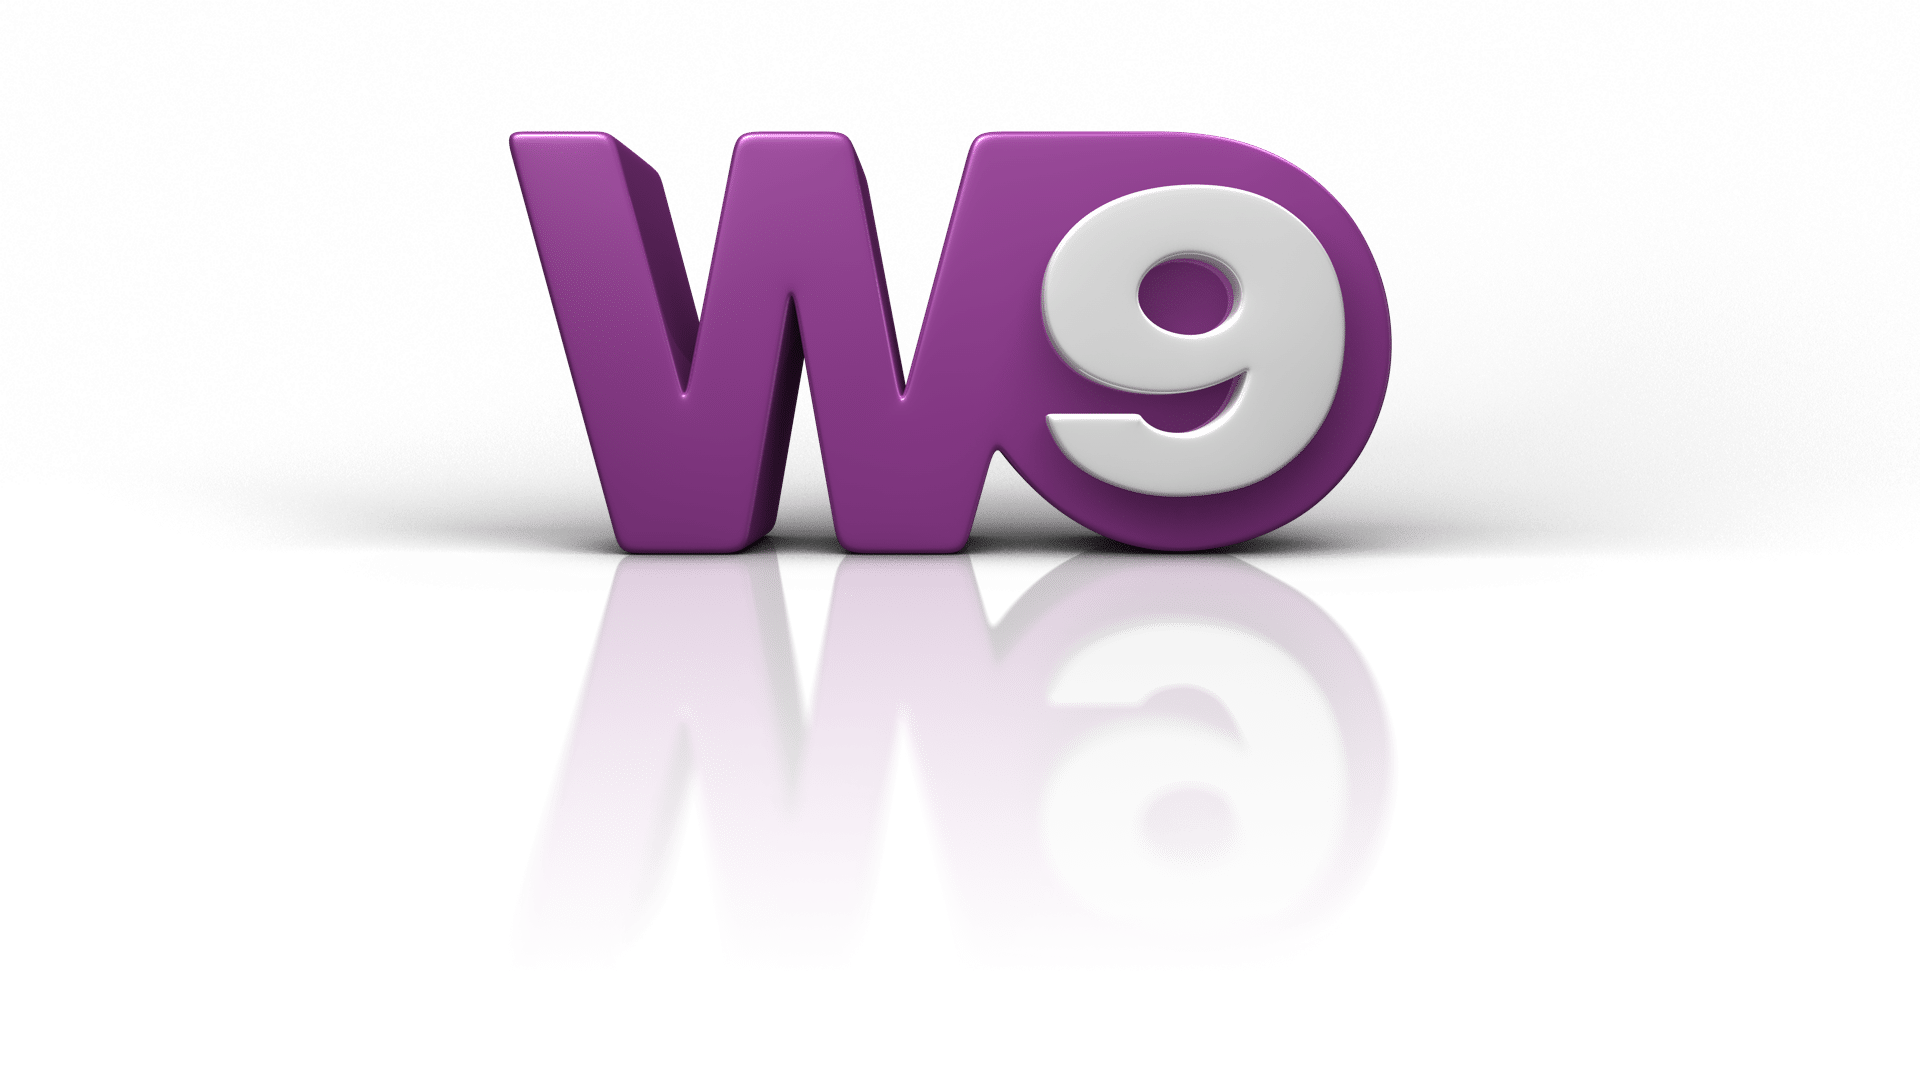 O9. M6 (Телеканал). Телеканал m6 логотип. W 9. W9 TV.